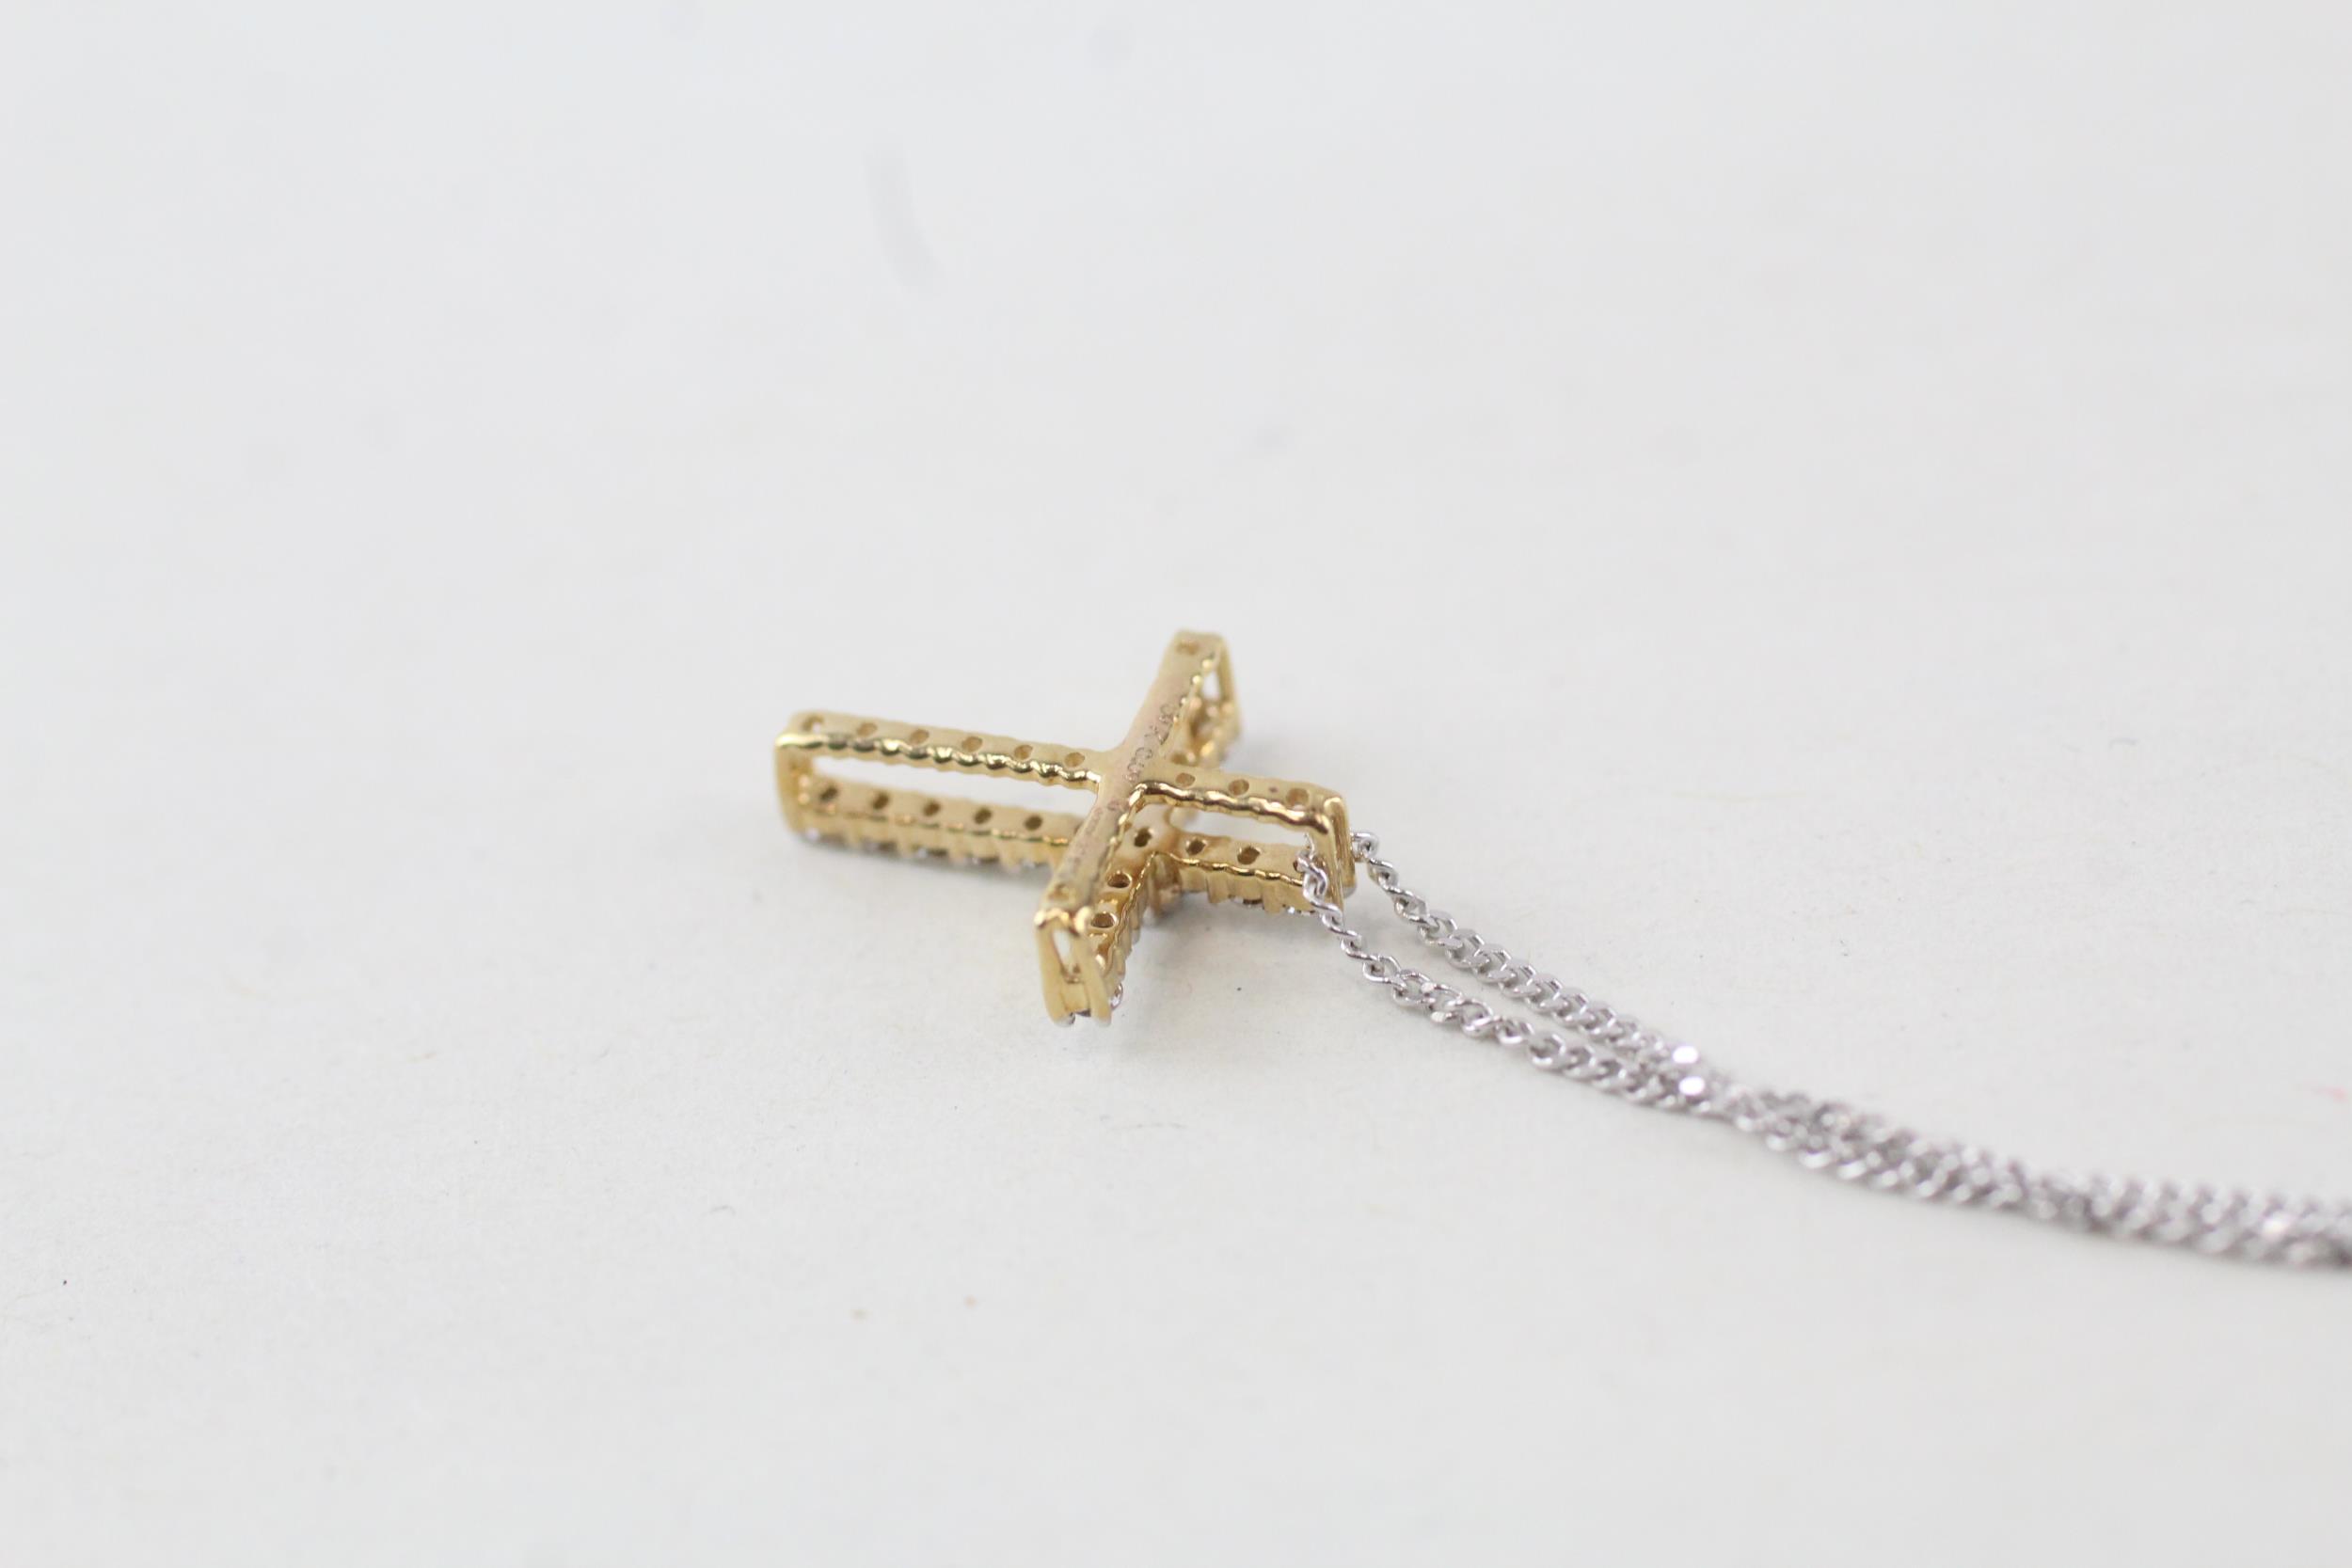 9ct gold diamond cross pendant necklace - 1.1 g - Image 2 of 3